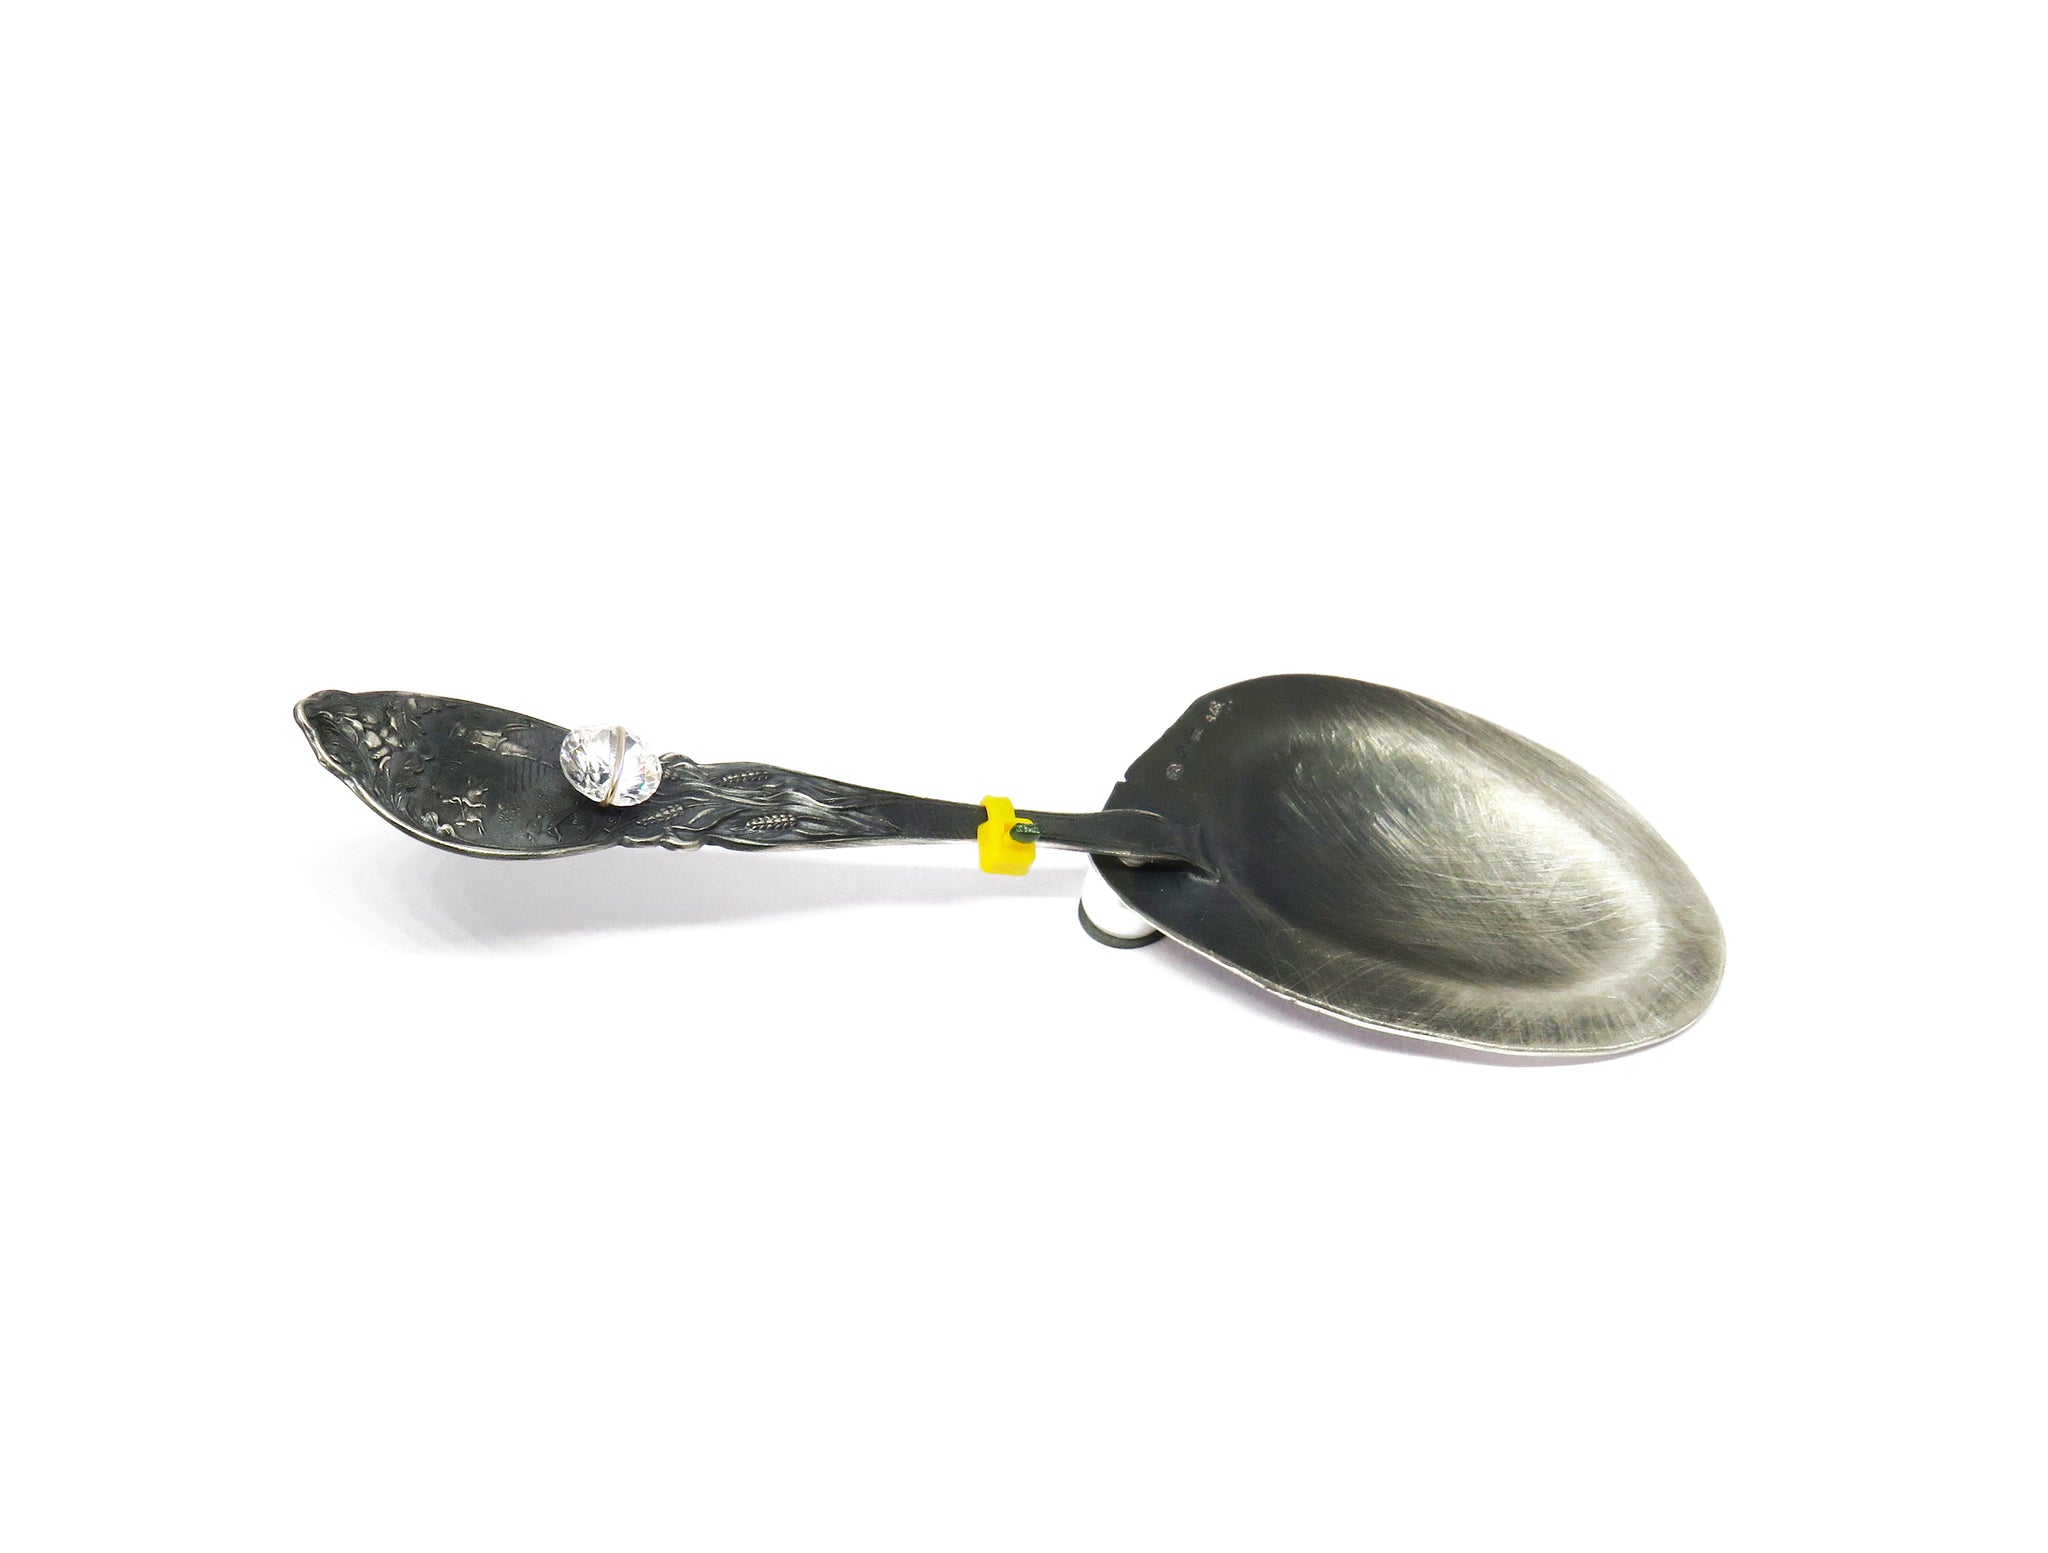 Yellow spoon